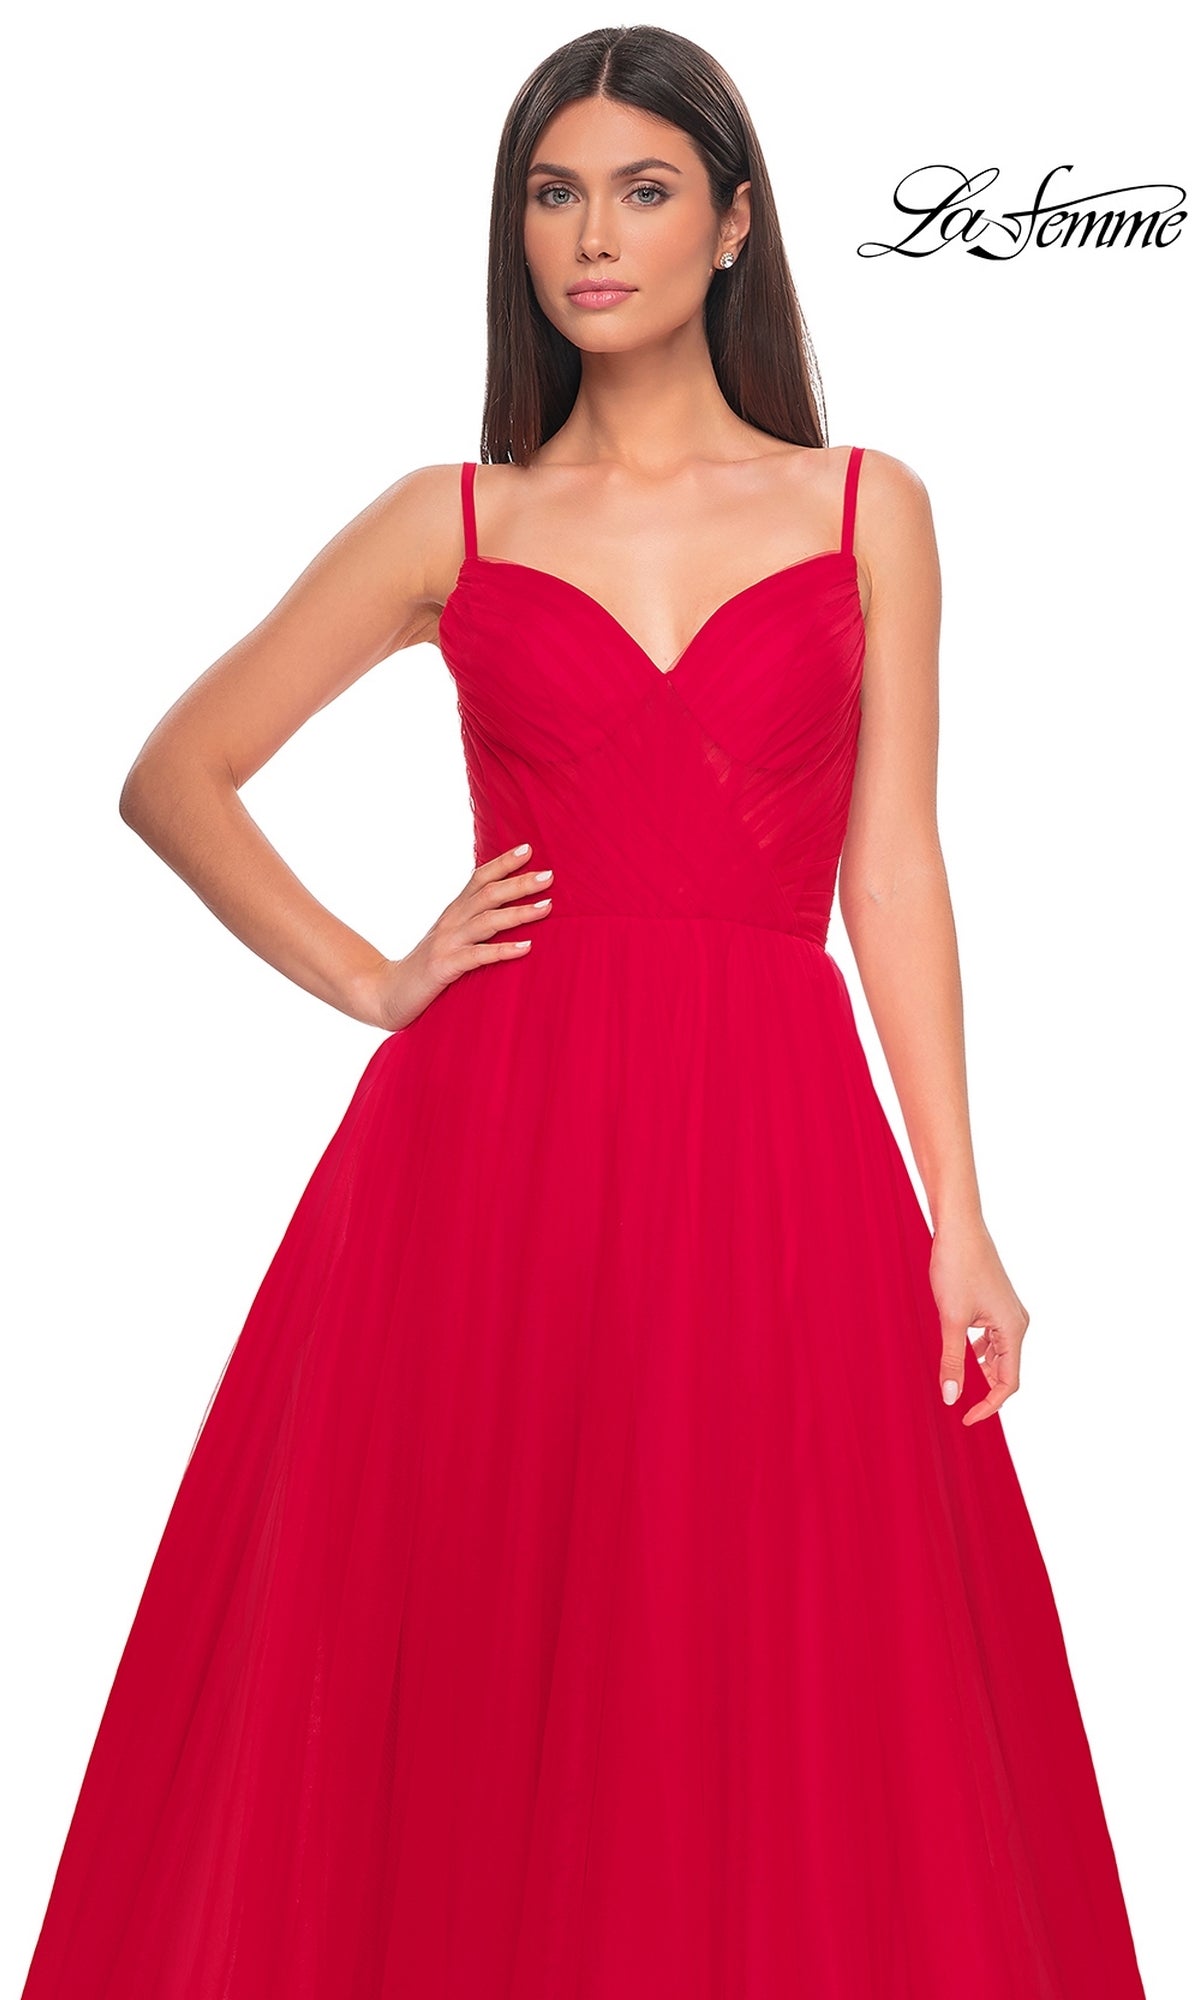  La Femme 32130 Formal Prom Dress